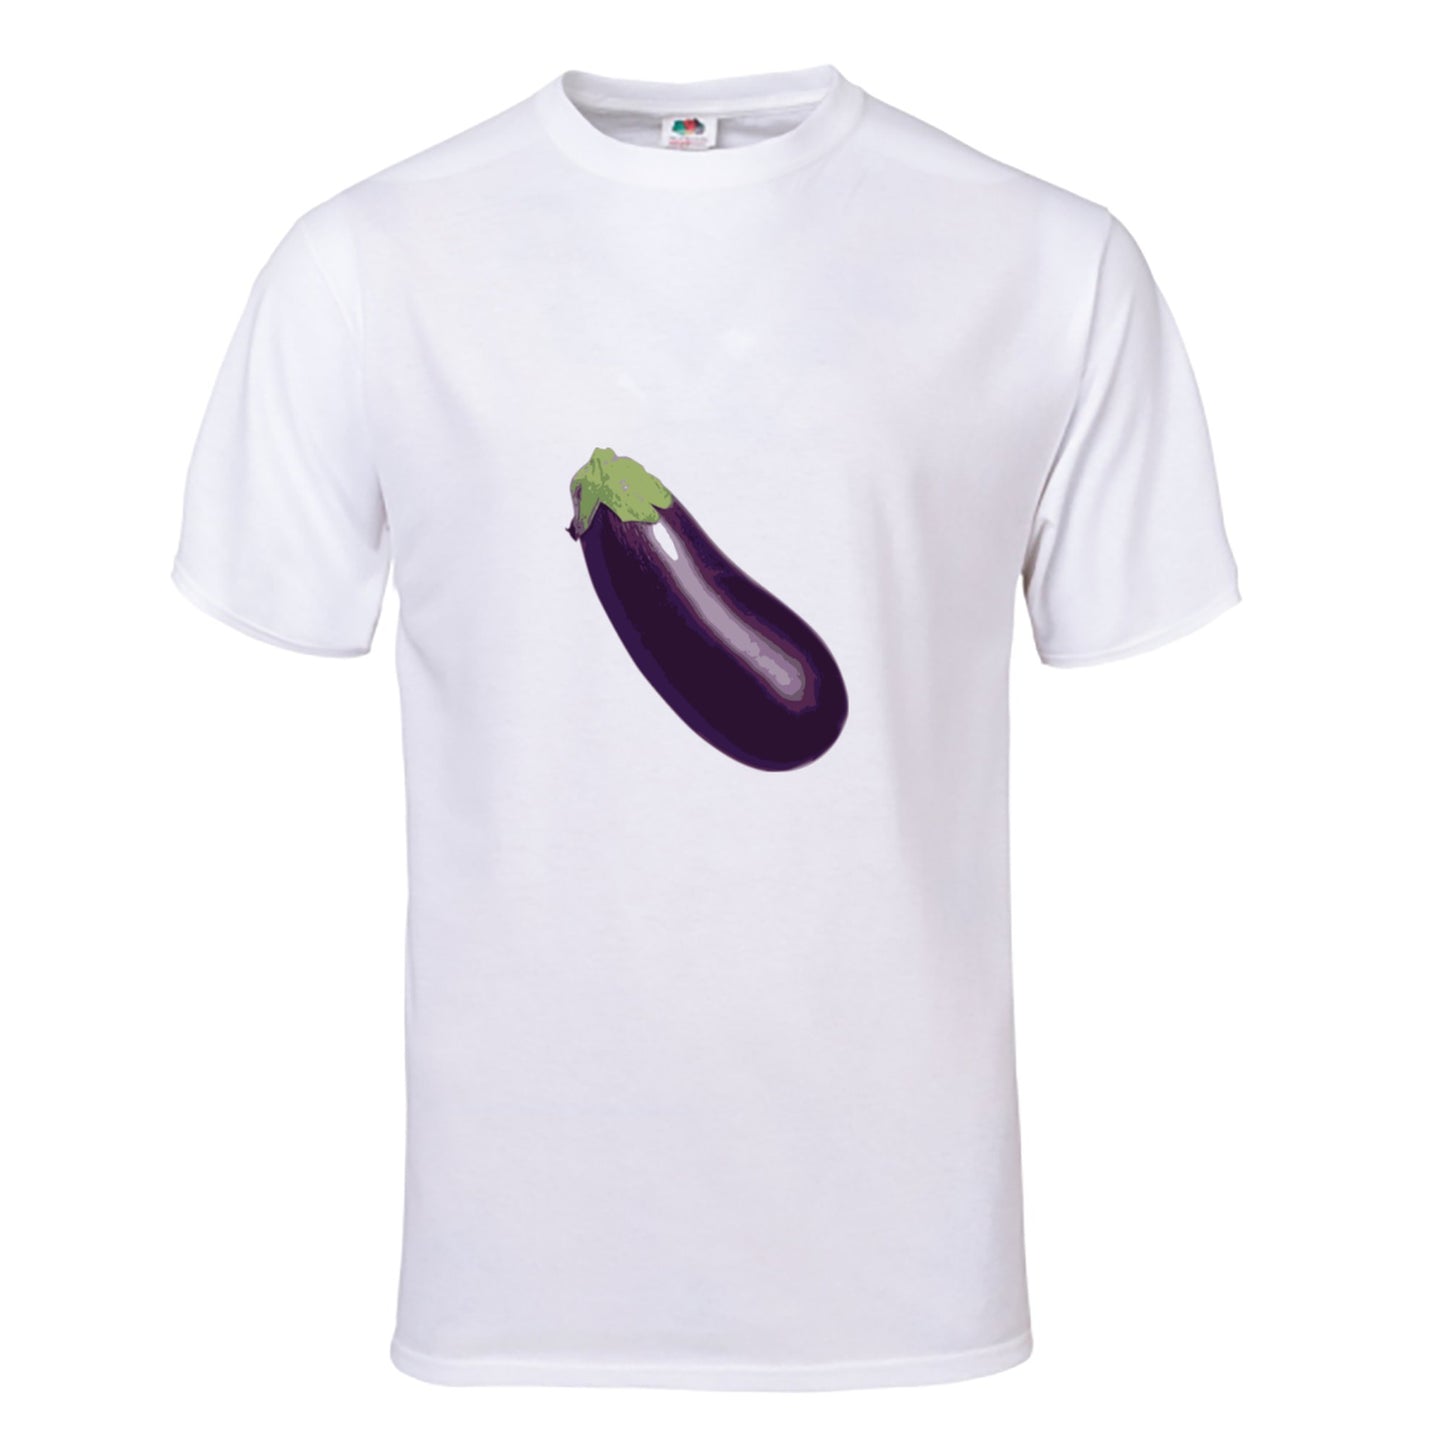 Eggplant Tee Shirt - Hypno Monkey